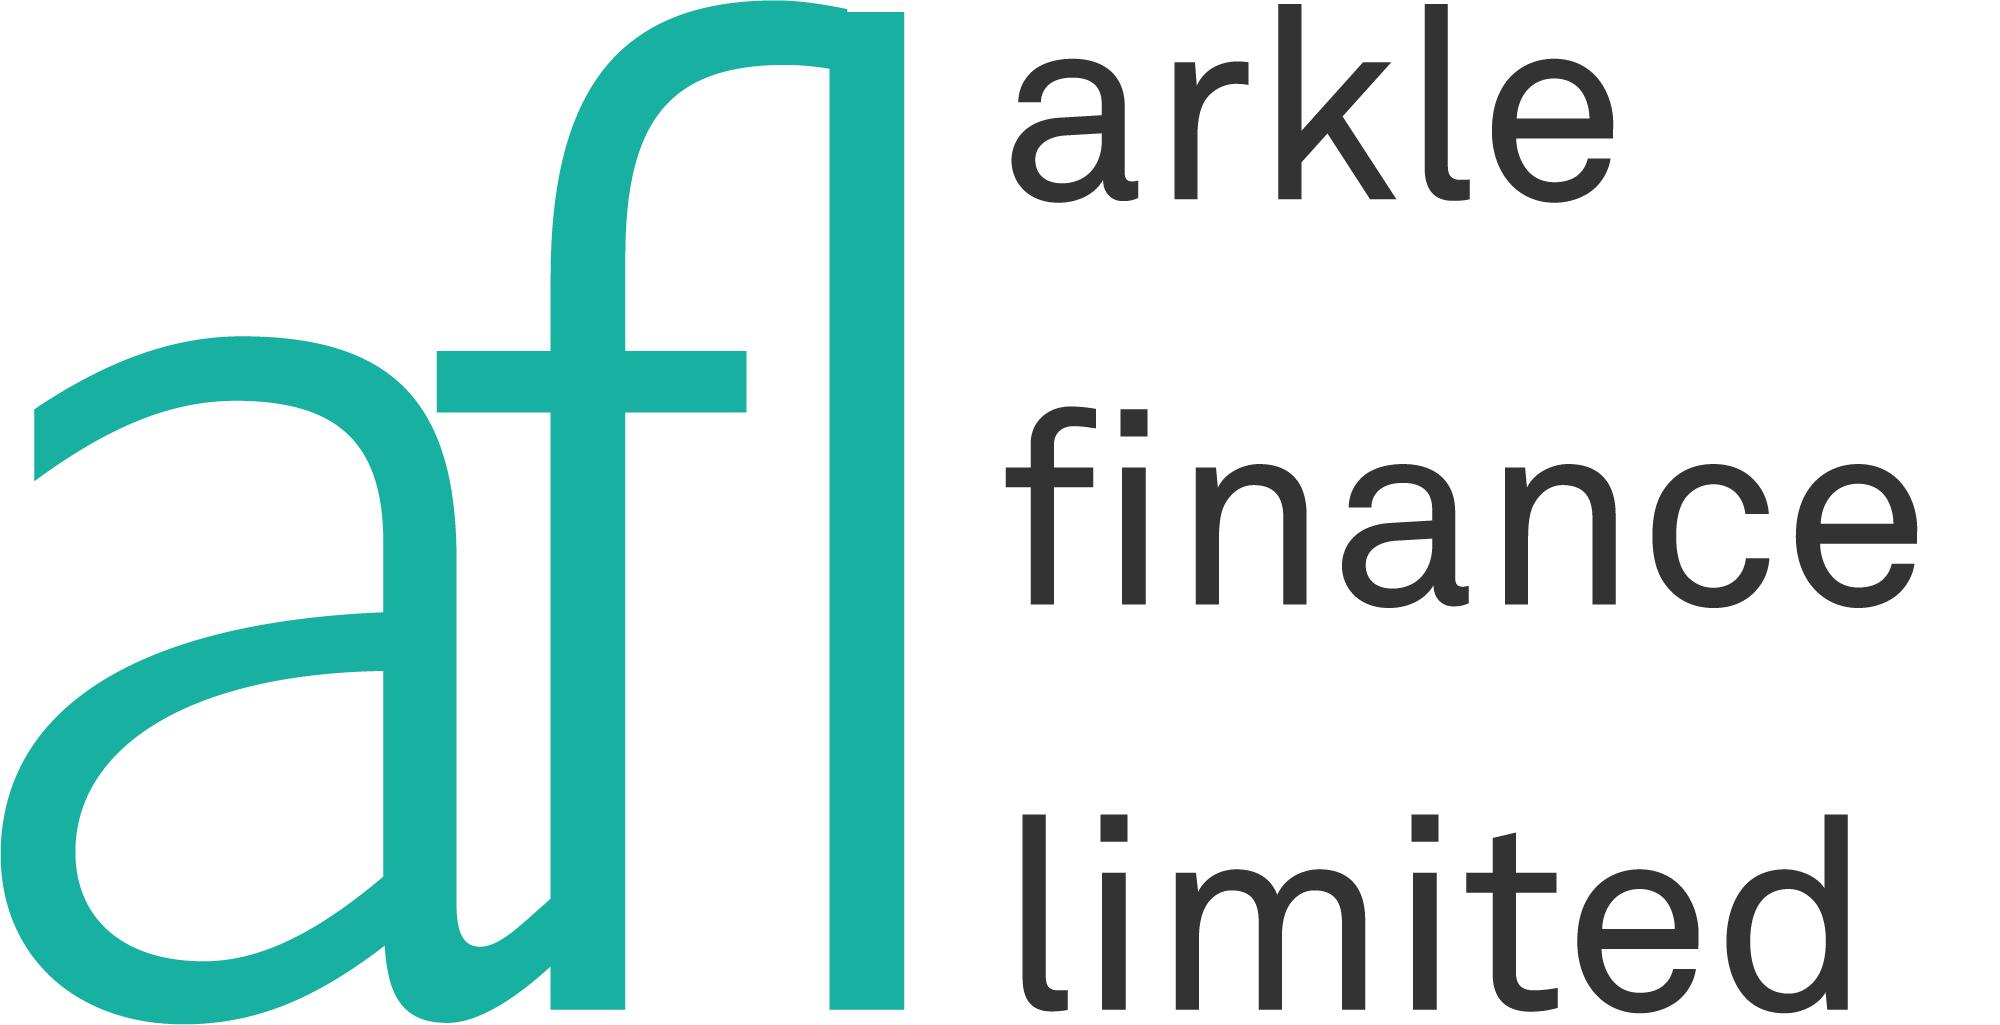 Arkle Finance Ltd